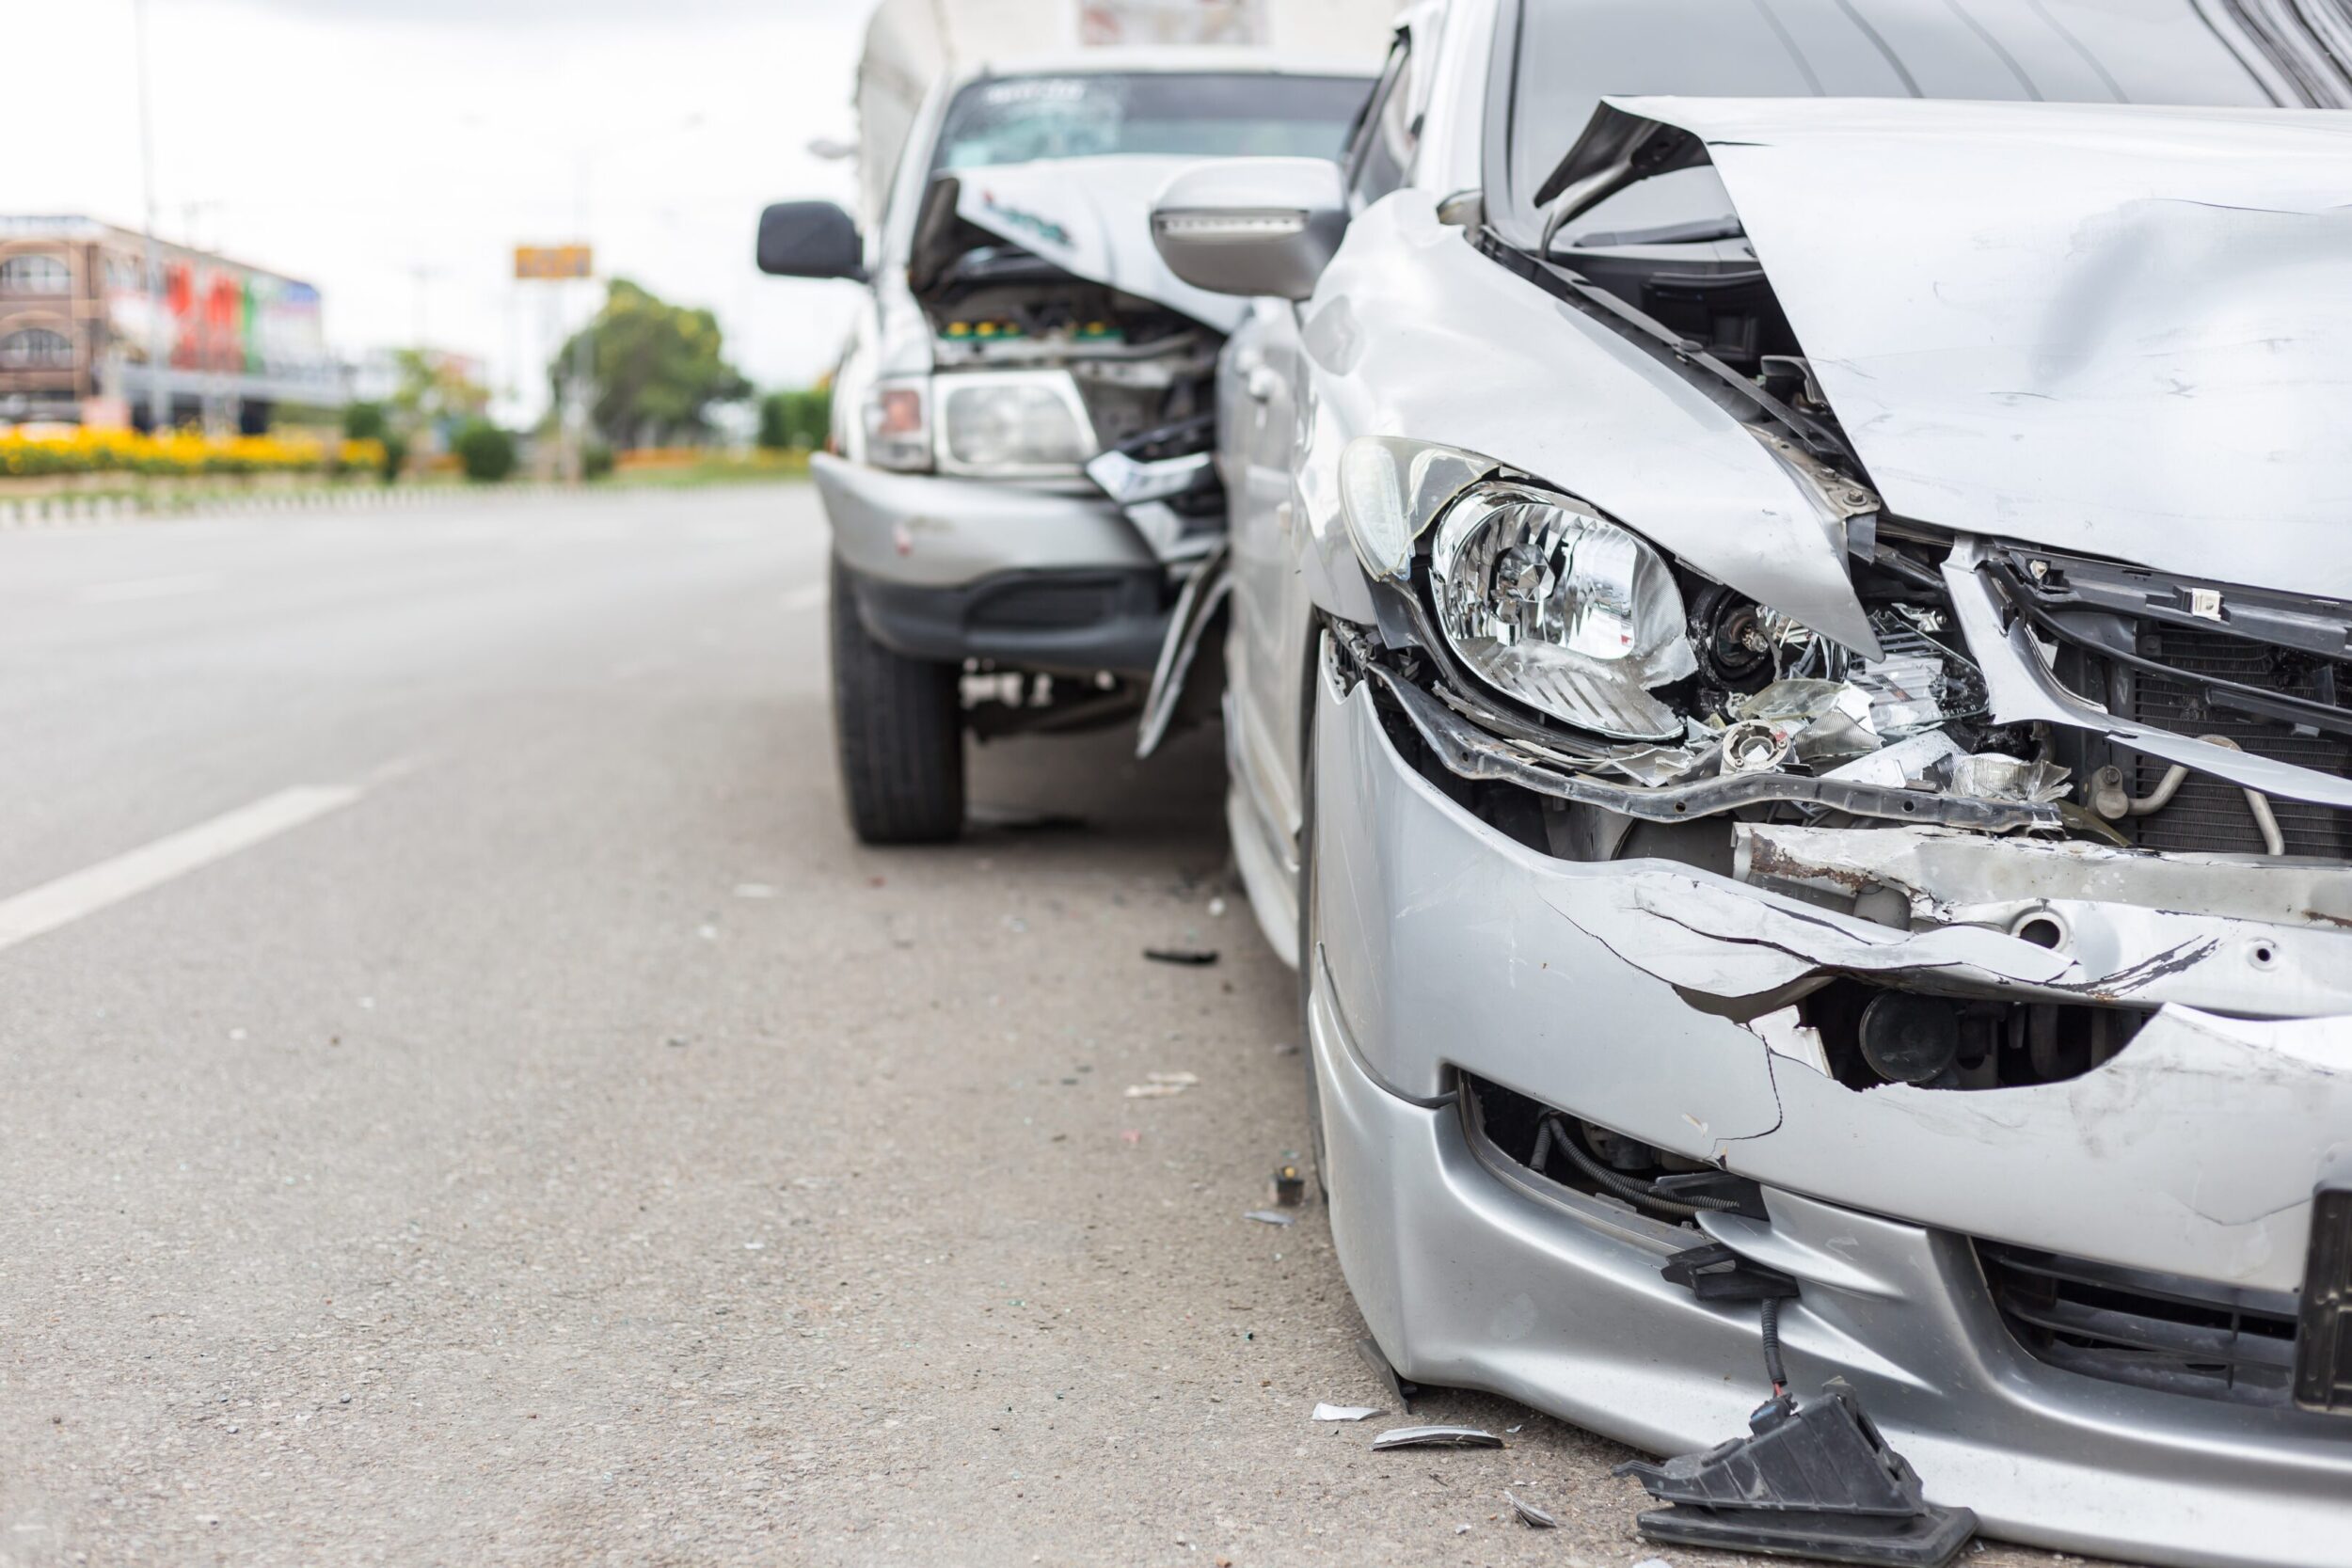 Tuolumne Meadows Good Auto Accident Attorney thumbnail